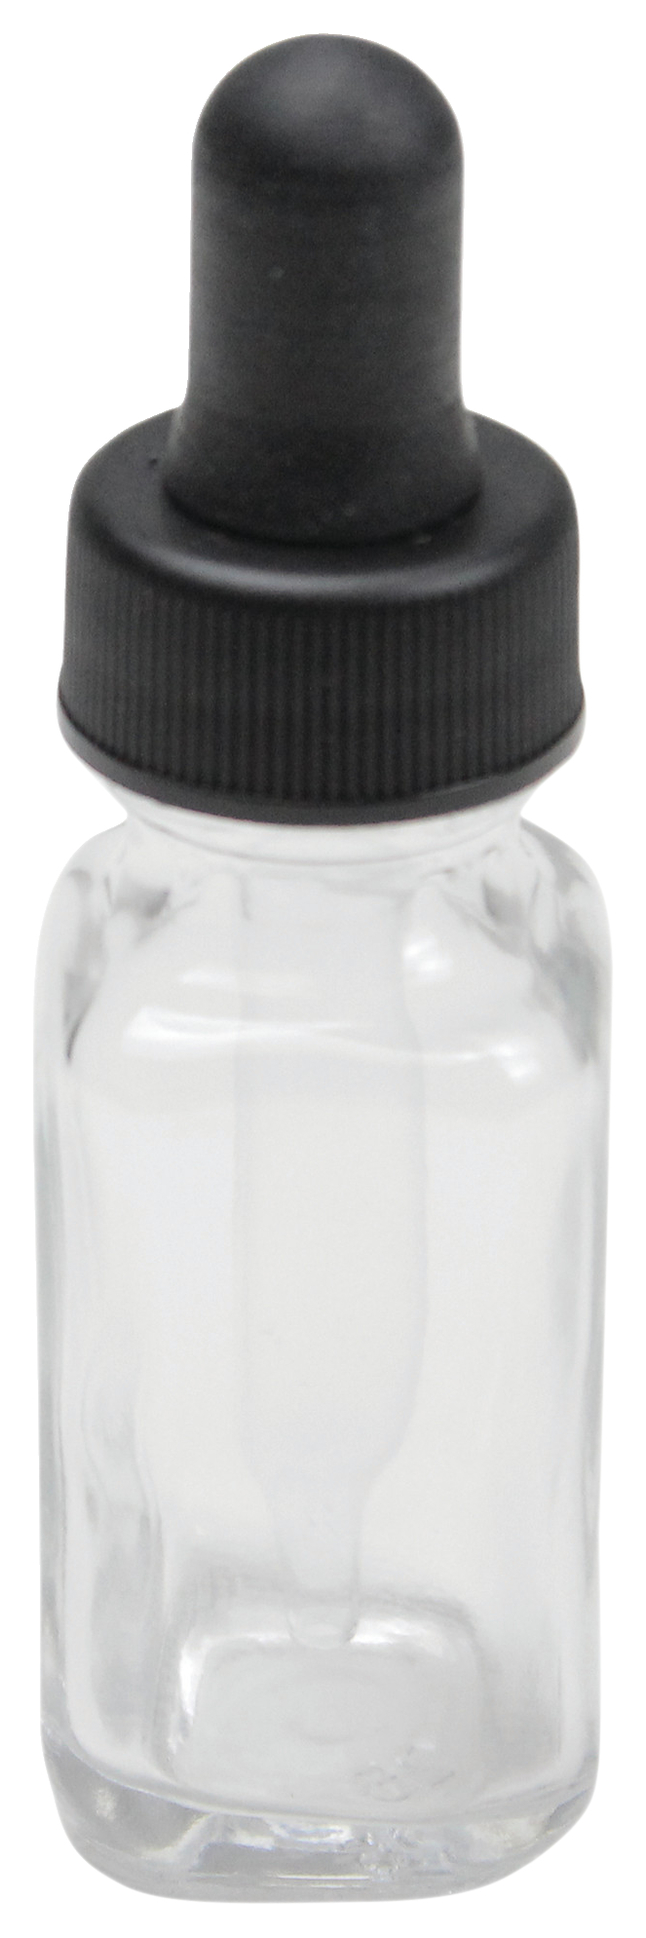 United Scientific Boston Round Flint Bottles, 60 mL, Pack of 12, Item Number 1294735